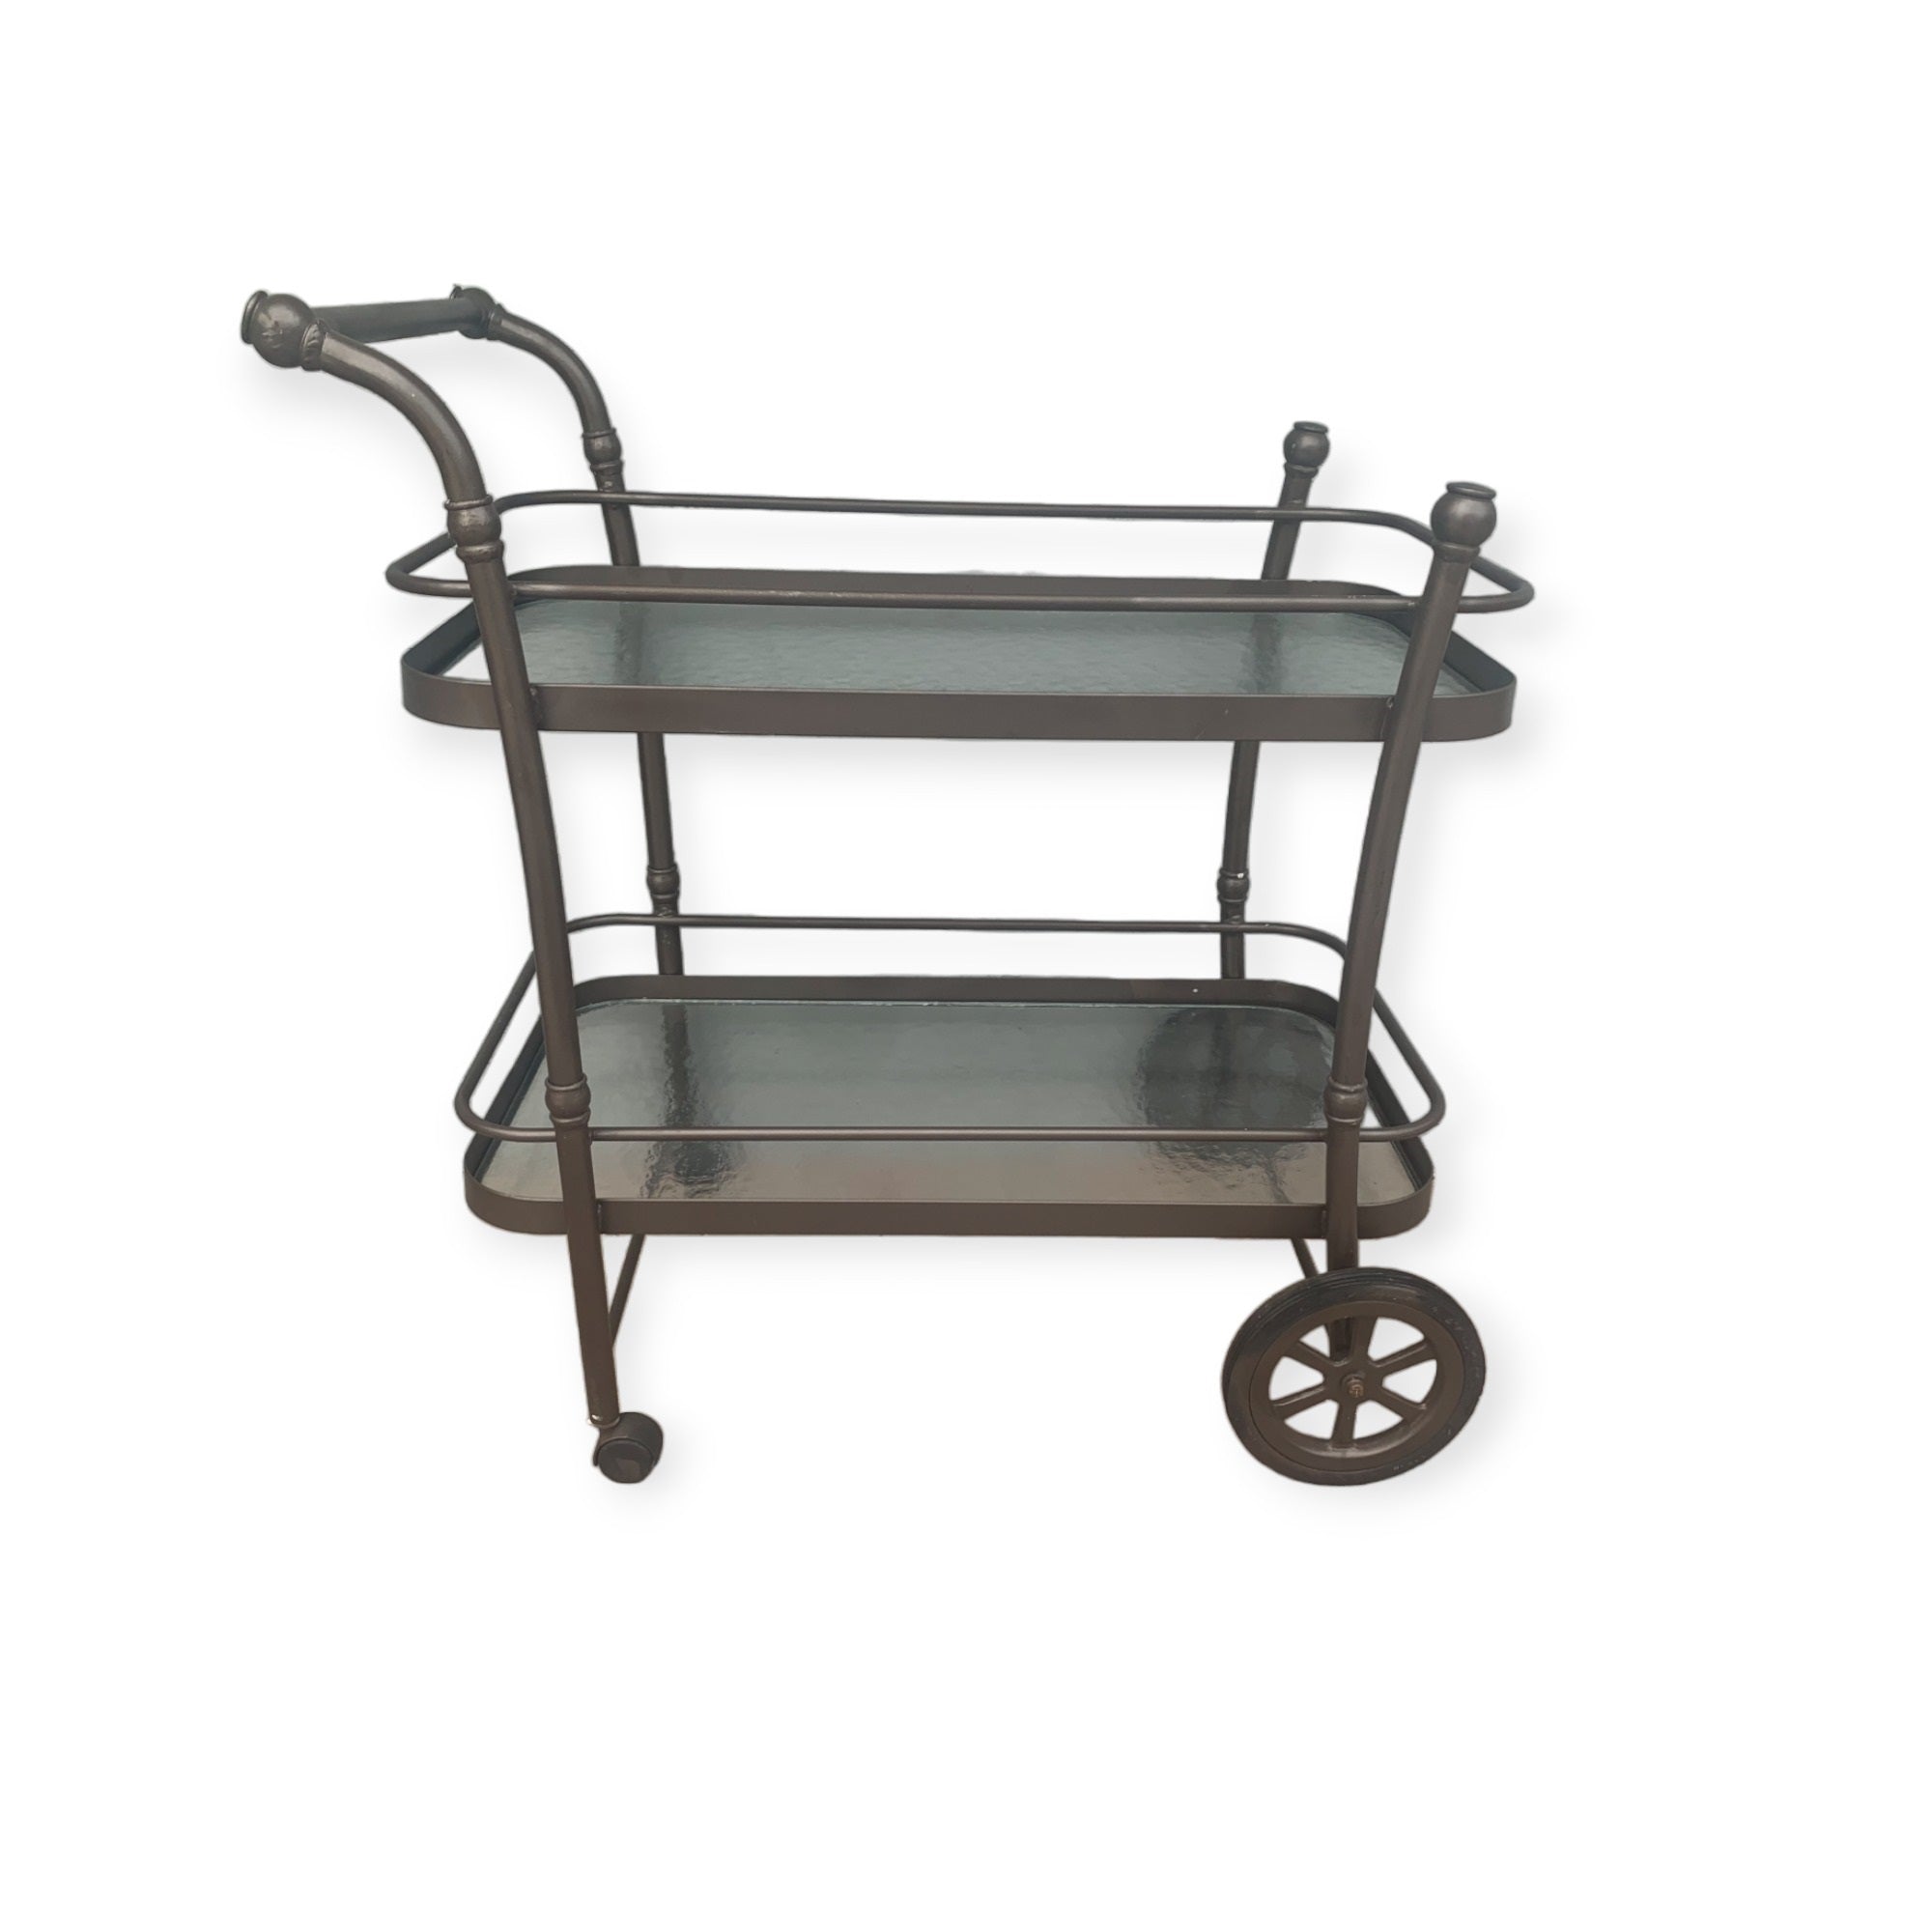 Cast Aluminum Two tier bar server cart